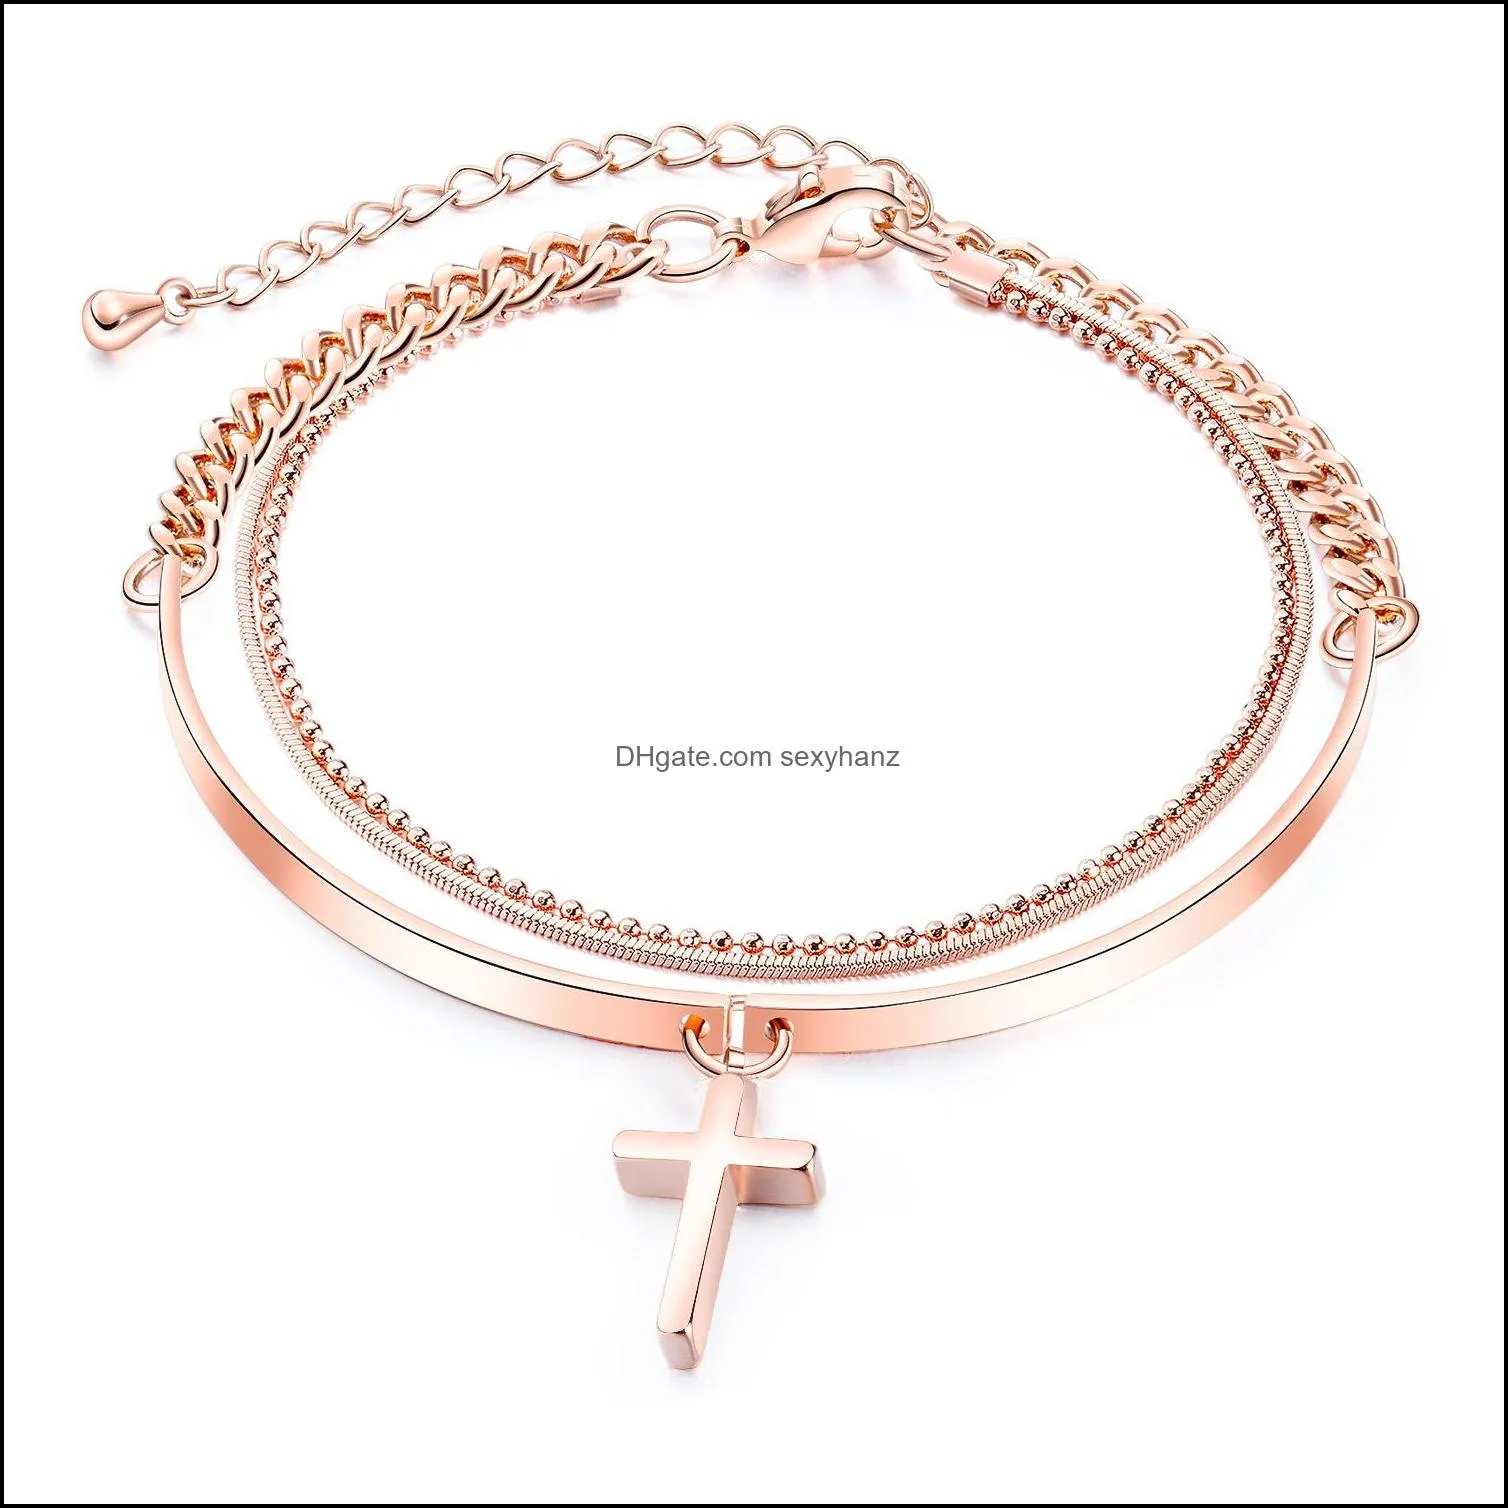 butterfly bracelet set cross evil eye key square beads chain bracelets adjustable charms beach jewelry for women girls